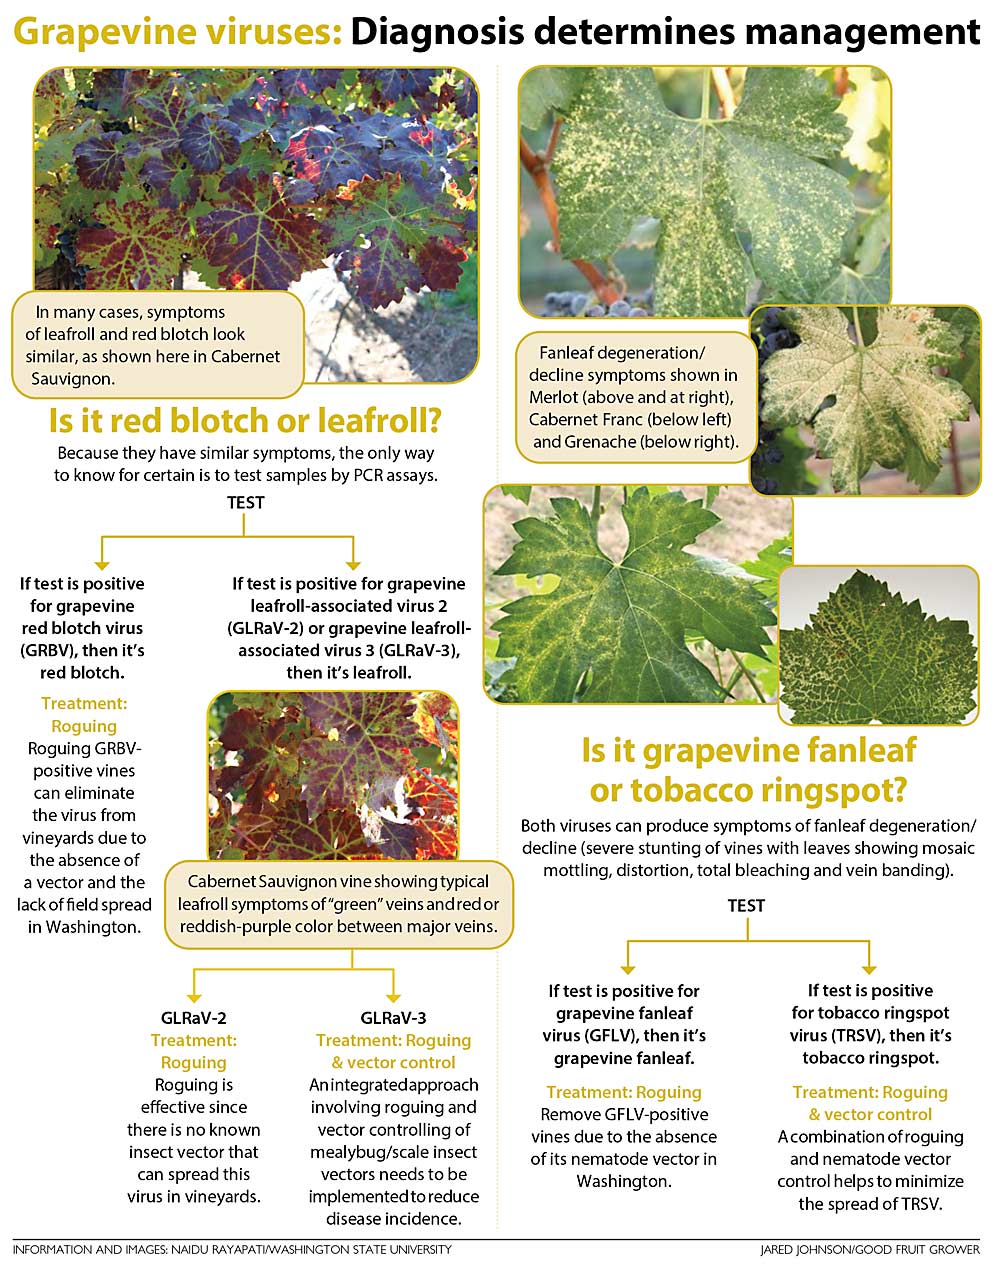 Diagnosis determines management of grapevine viruses. (Information and Images: Naidu Rayapati/Washington STate University; Jared Johnson/Good Fruit Grower)